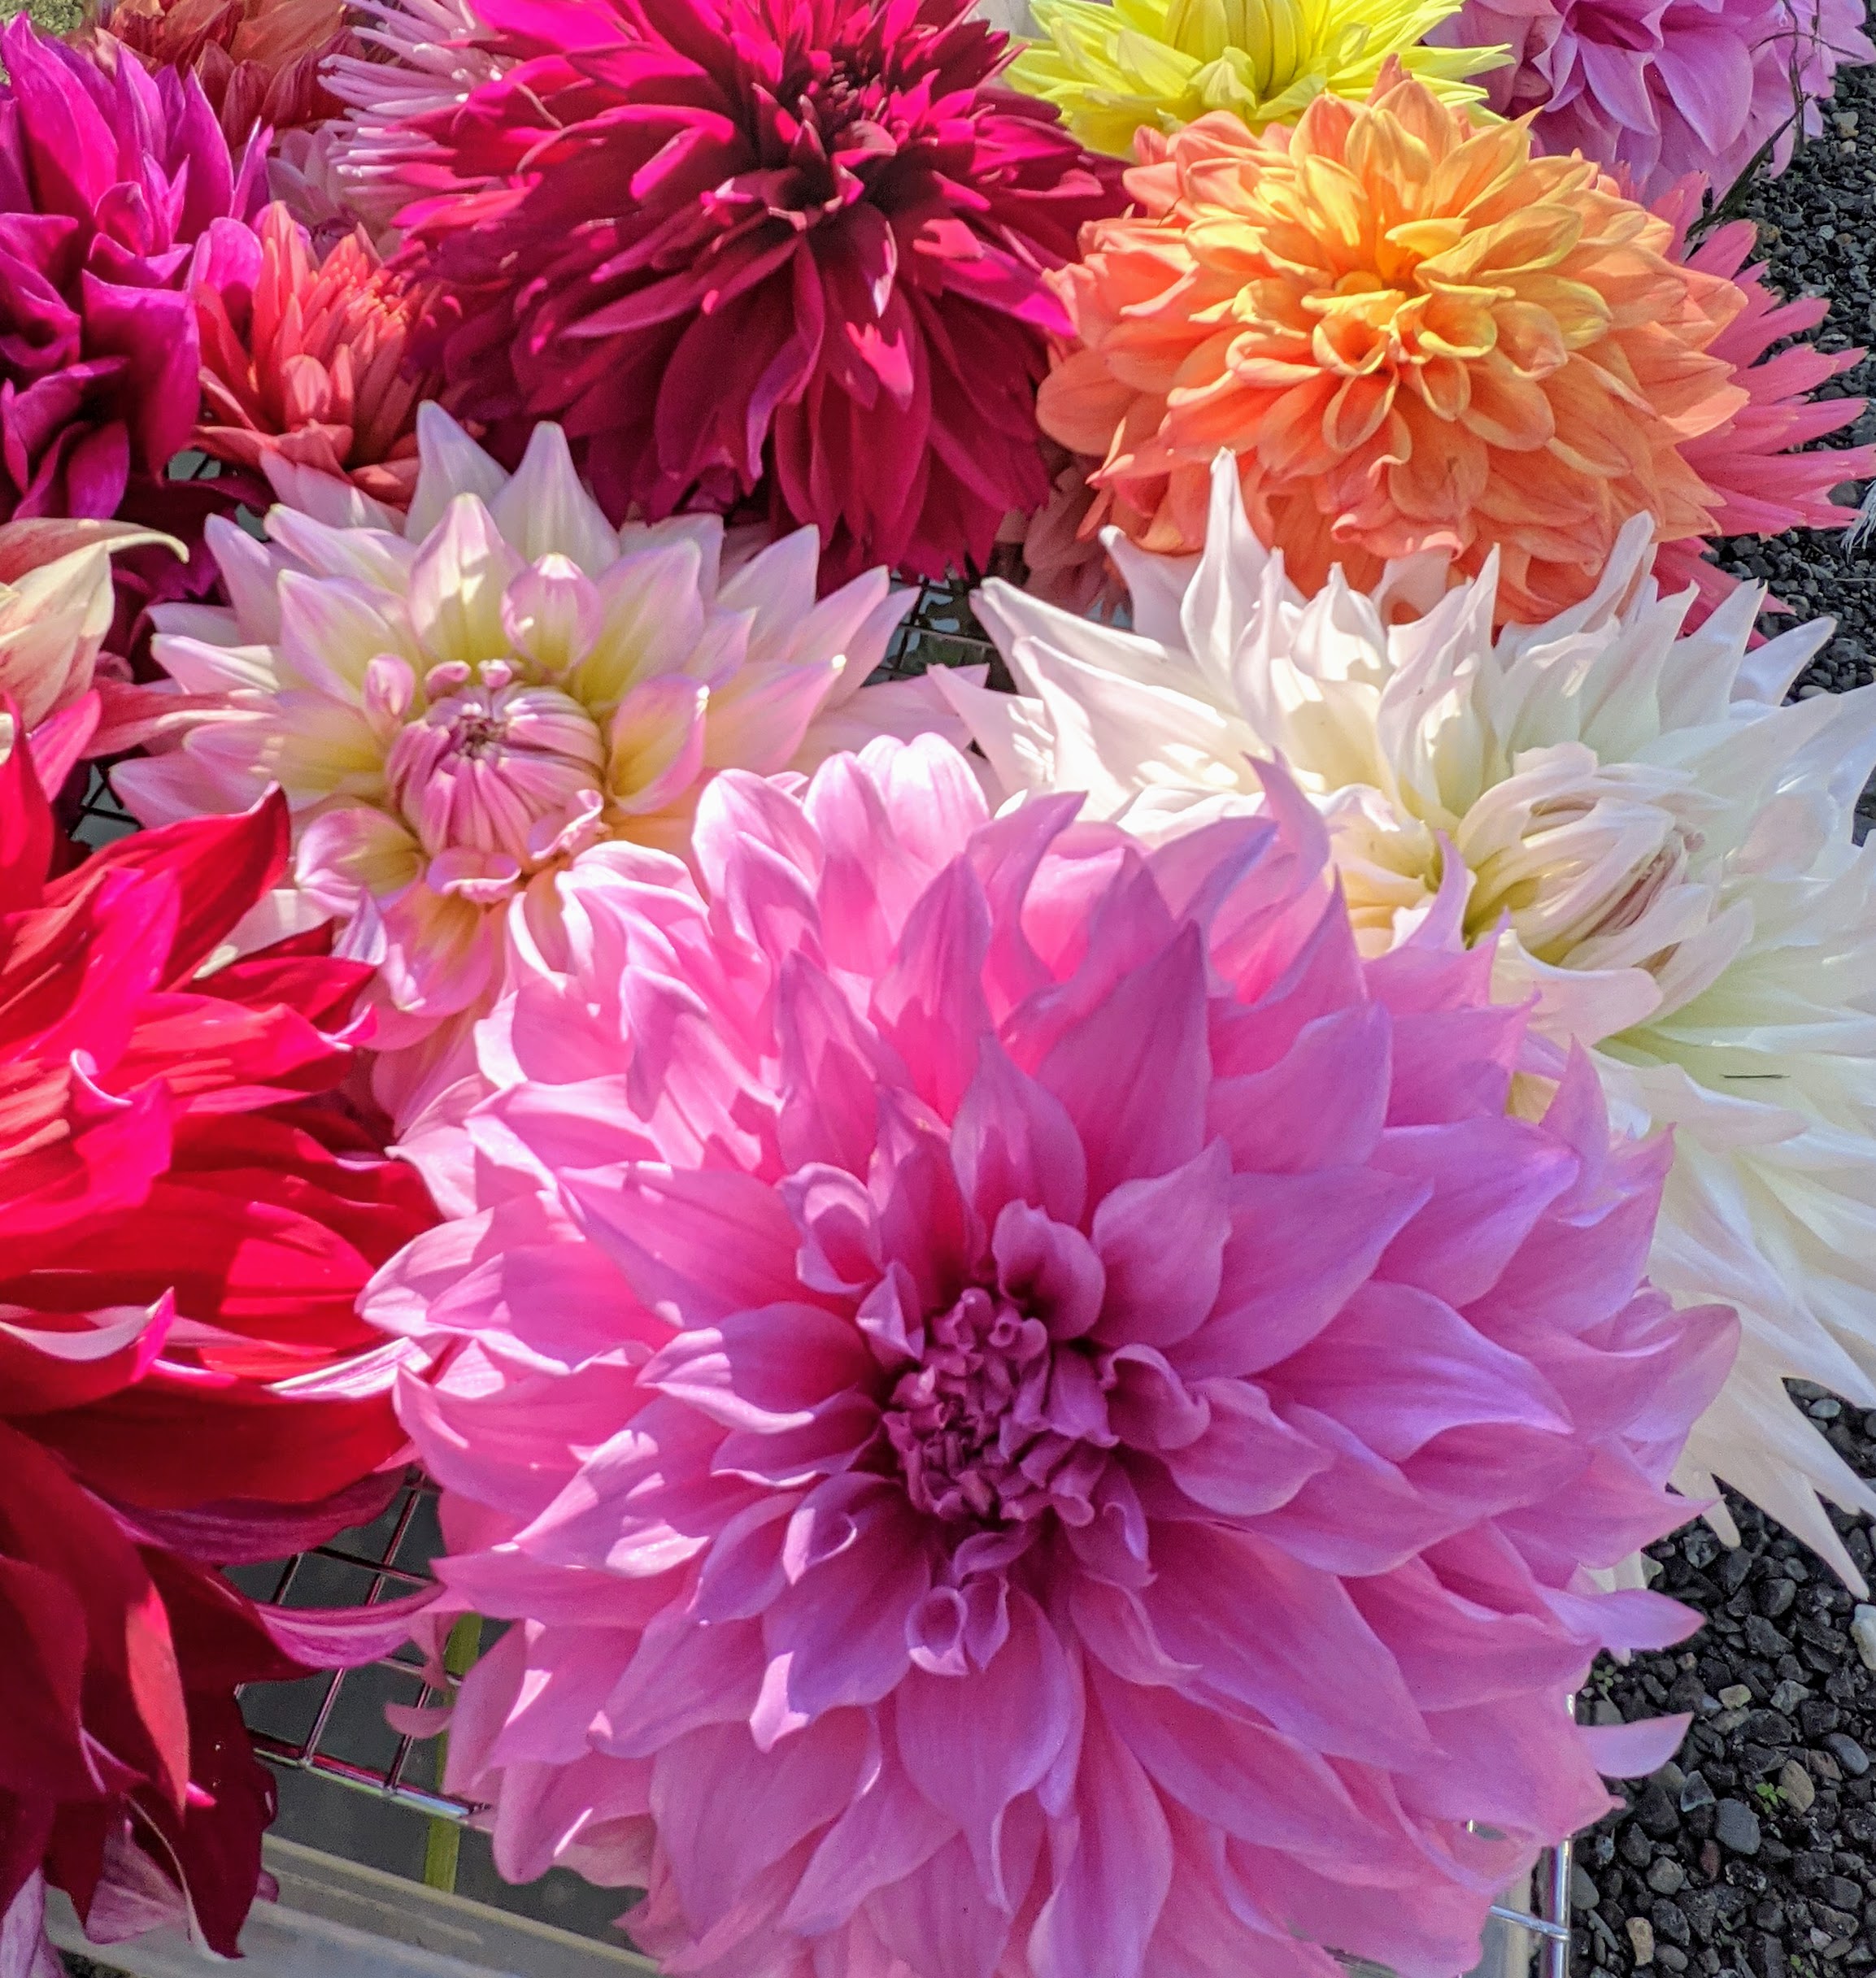 More Beautiful, Colorful Dahlias   The Martha Stewart Blog